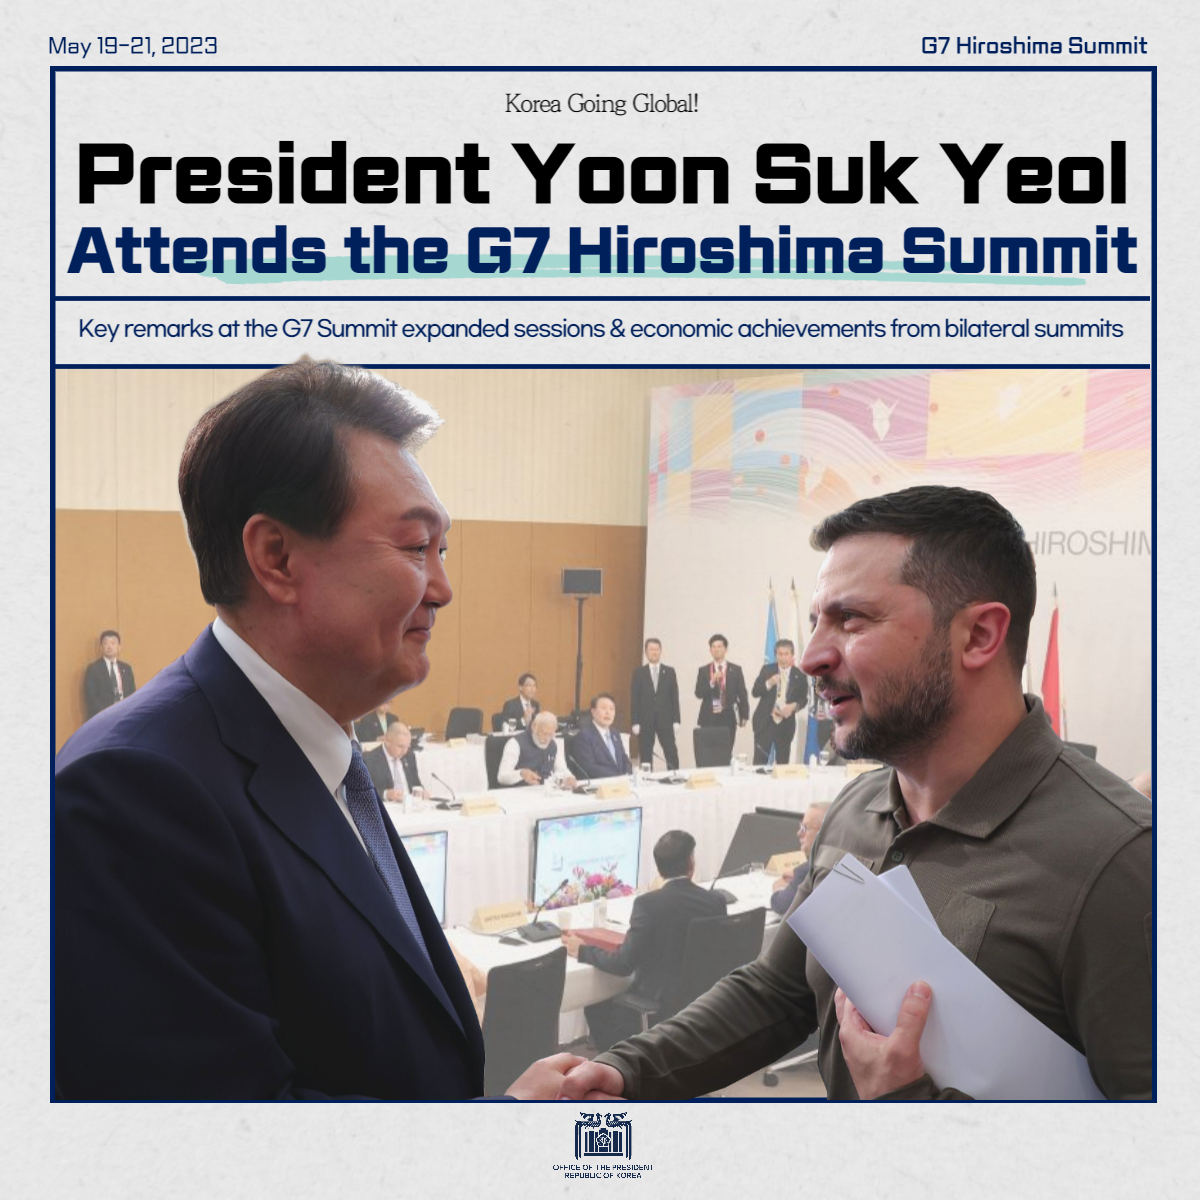 Korea Going Global! President Yoon Suk Yeol Attends the G7 Hiroshima Summit